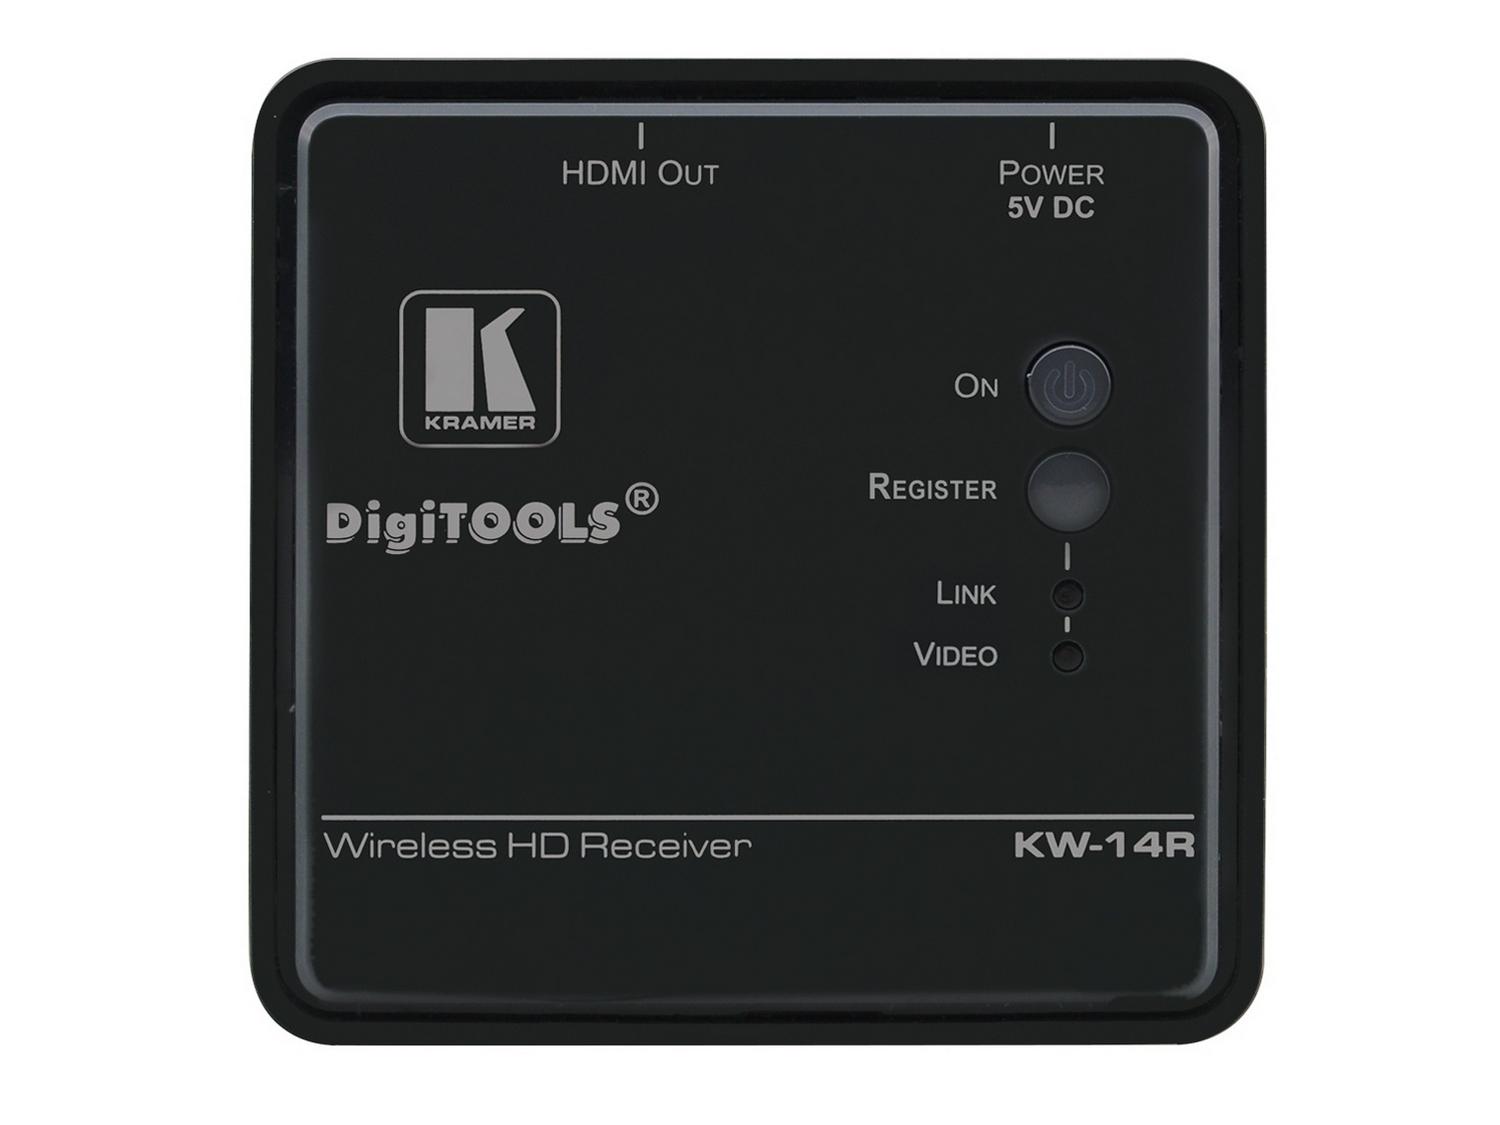 KW-14R Wireless HD Extender (Receiver) by Kramer